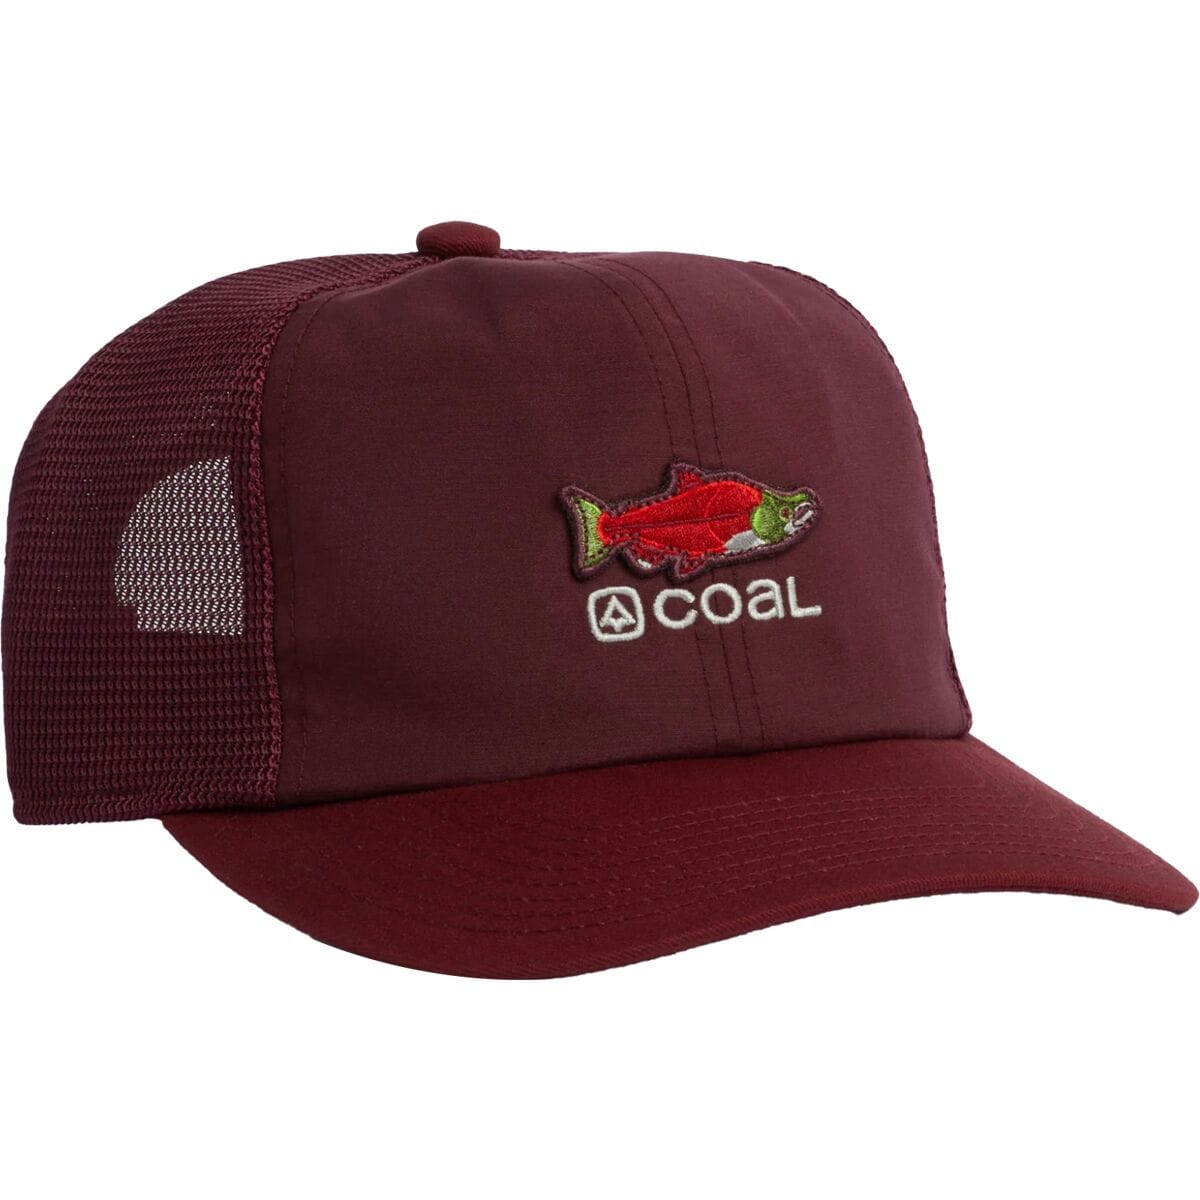 аналоговая шляпа coal headwear цвет fuchsia Зефирная шляпа Coal Headwear, красный